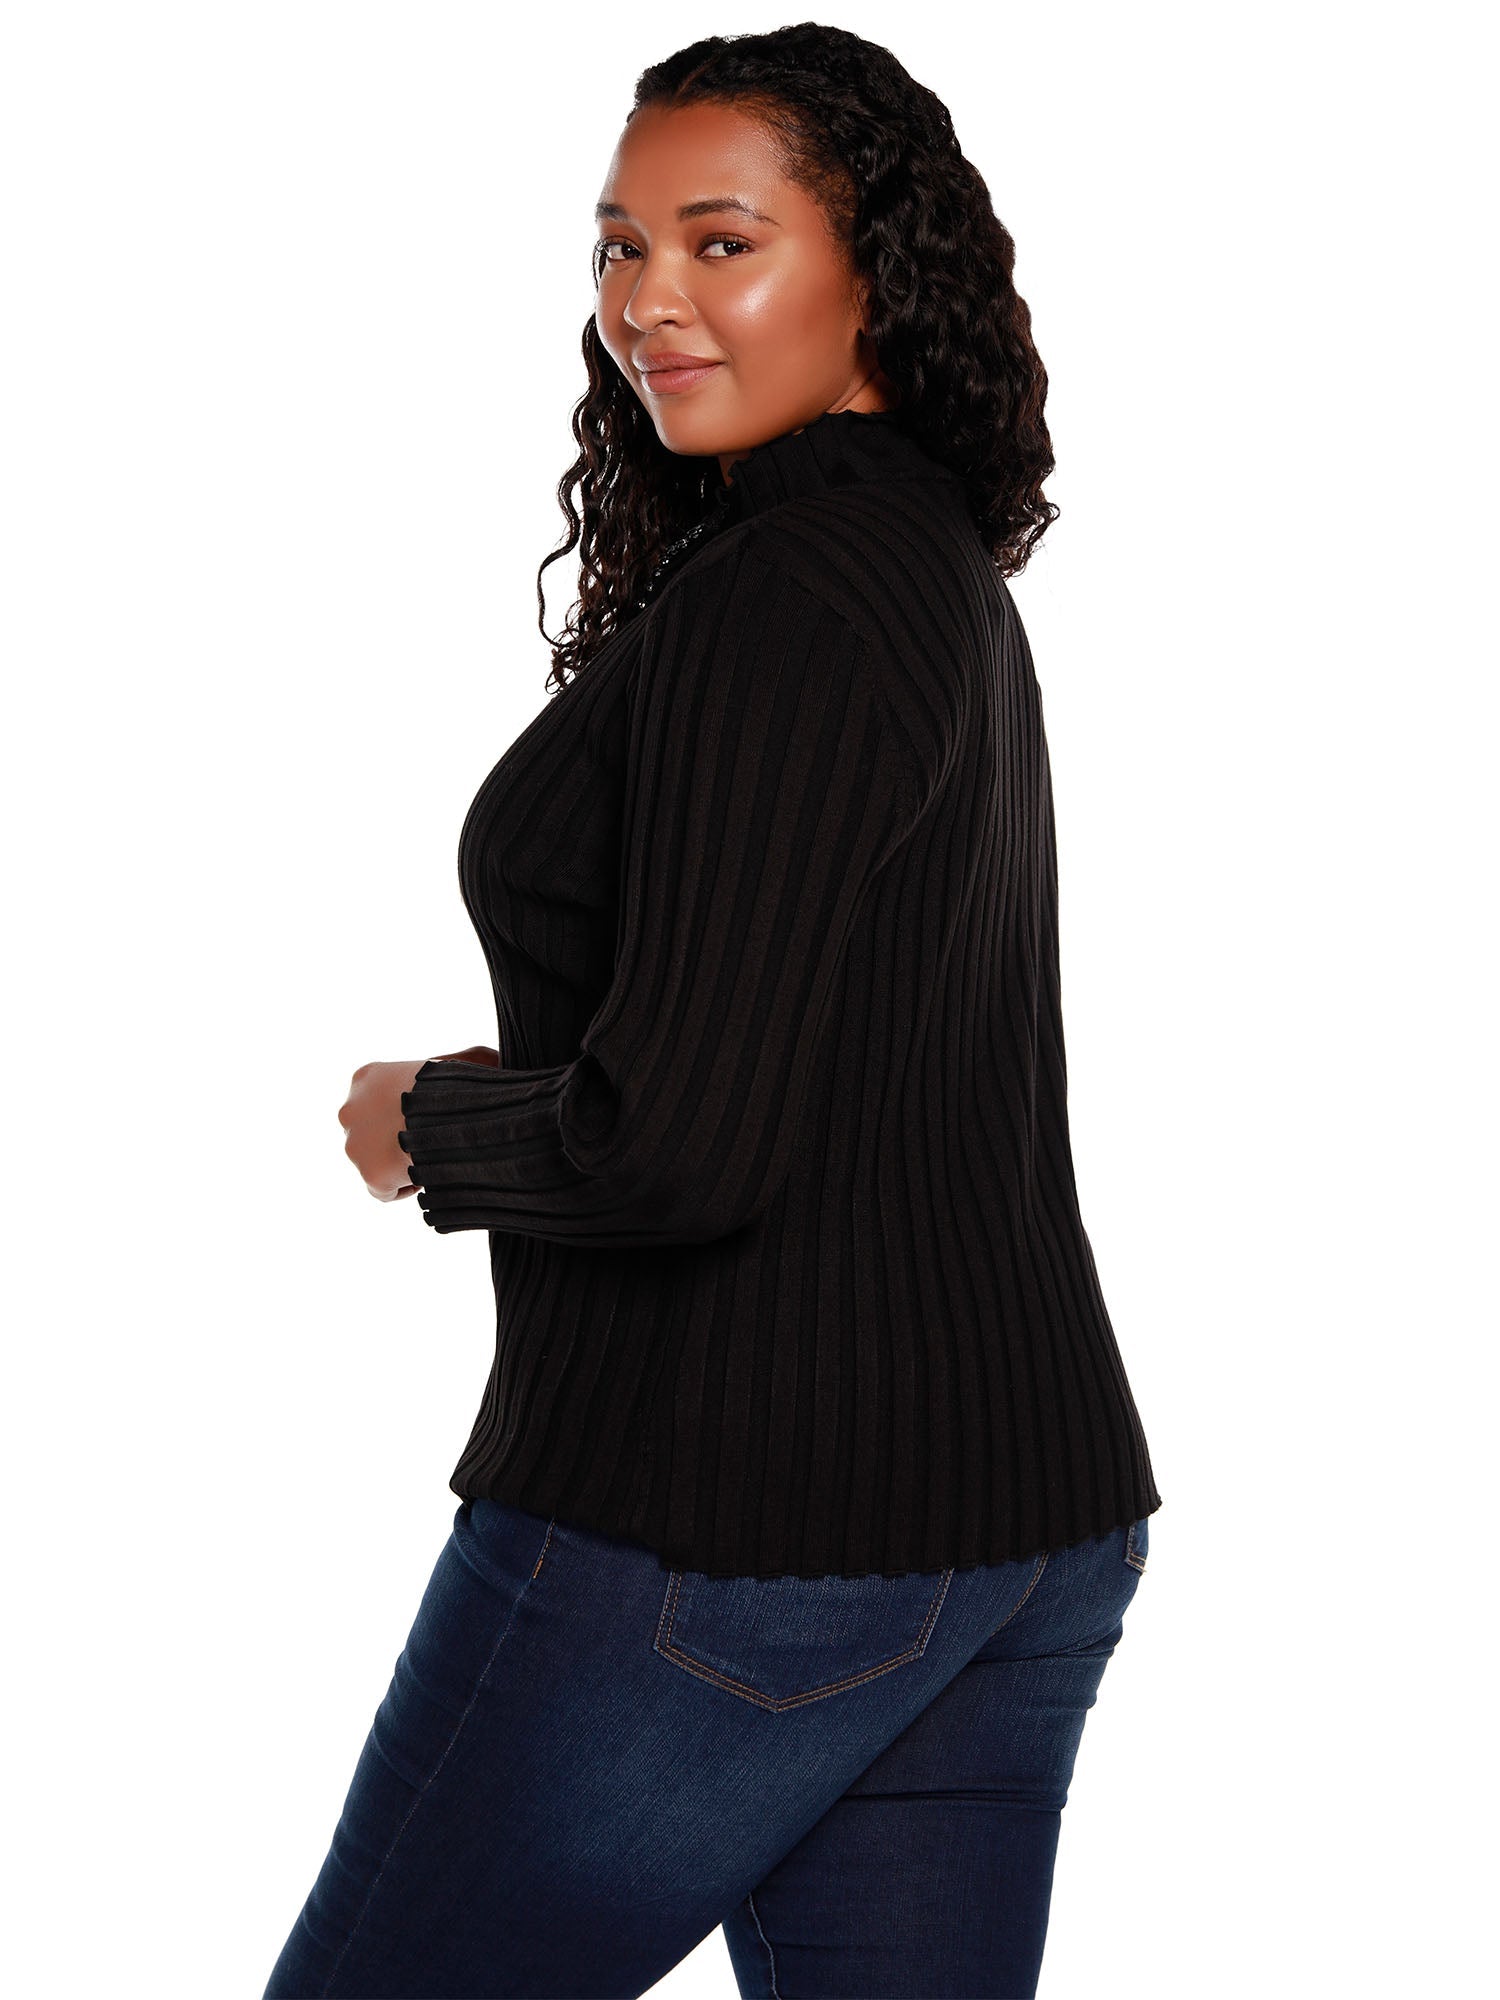 Women's Long Sleeve Zip Front Sweater with Mock Neck & Diamond Rhinestone Zipper | Curvy